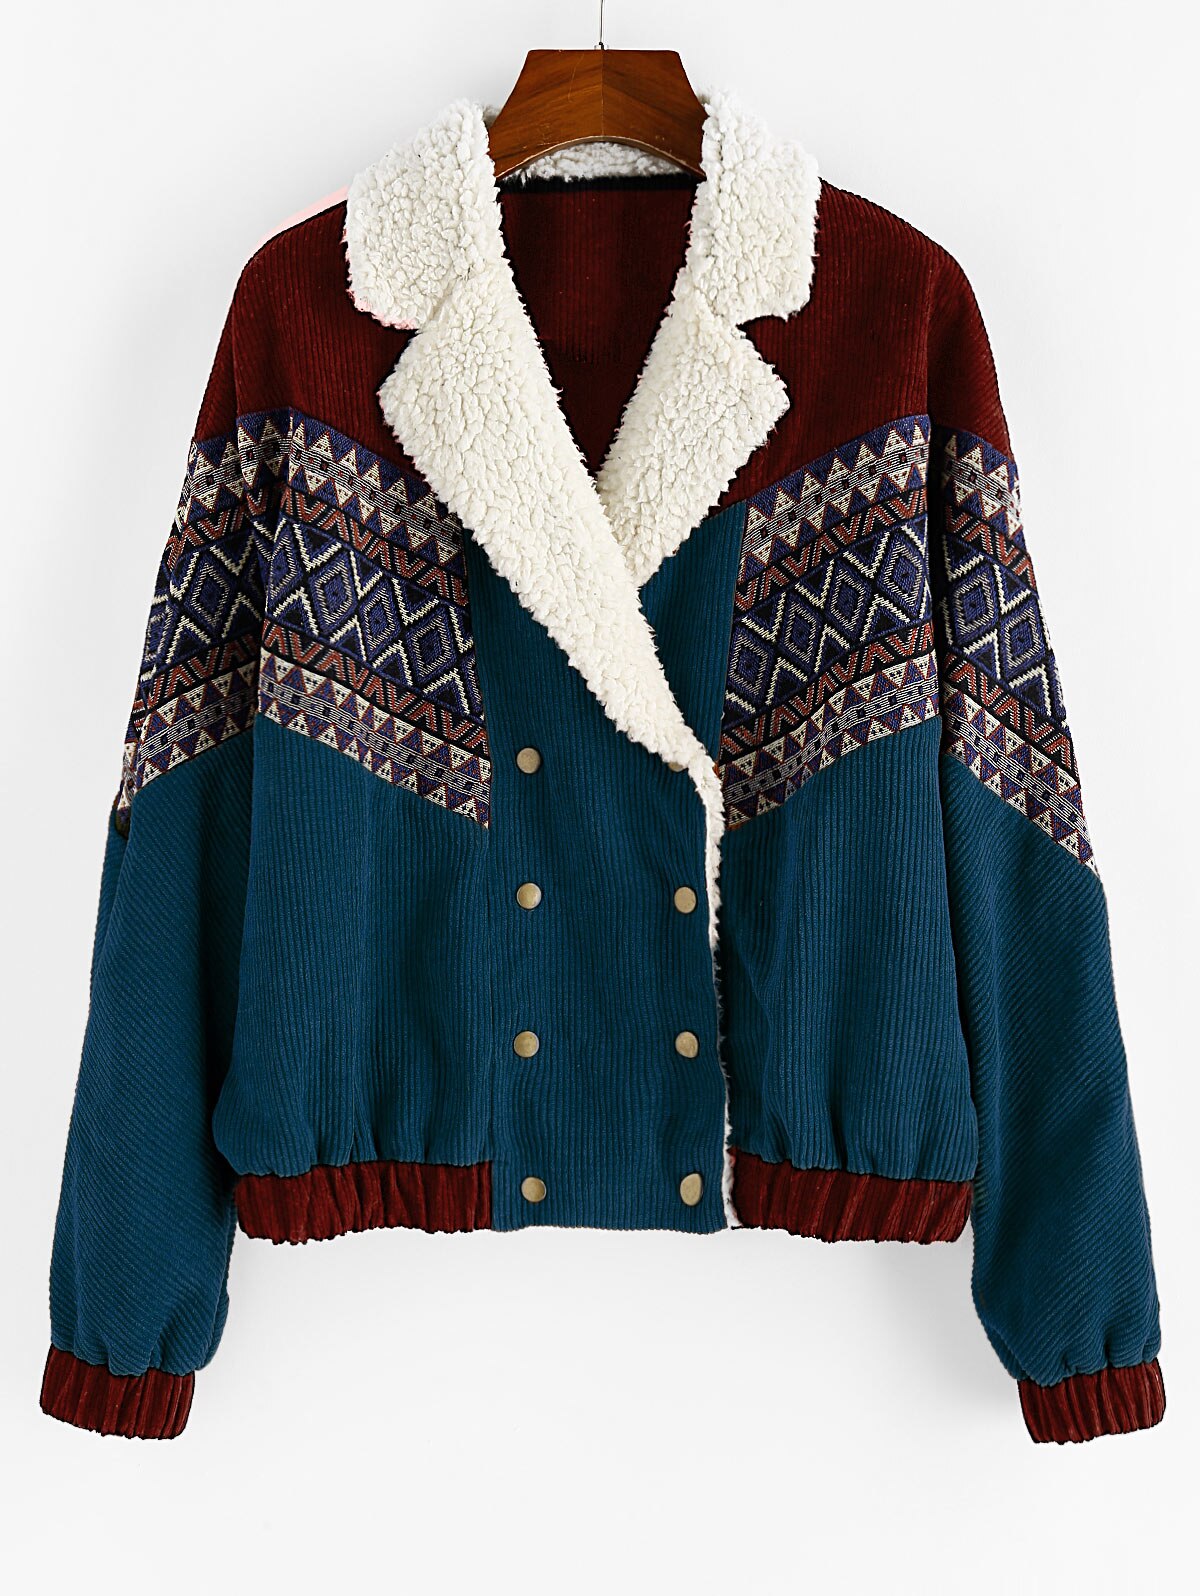 Billlnai Jacket Coats Women Vintage Outwear Tunic Double Breasted Tribal Print Faux Shearling Panel Corduroy Jacket For Fall Winter